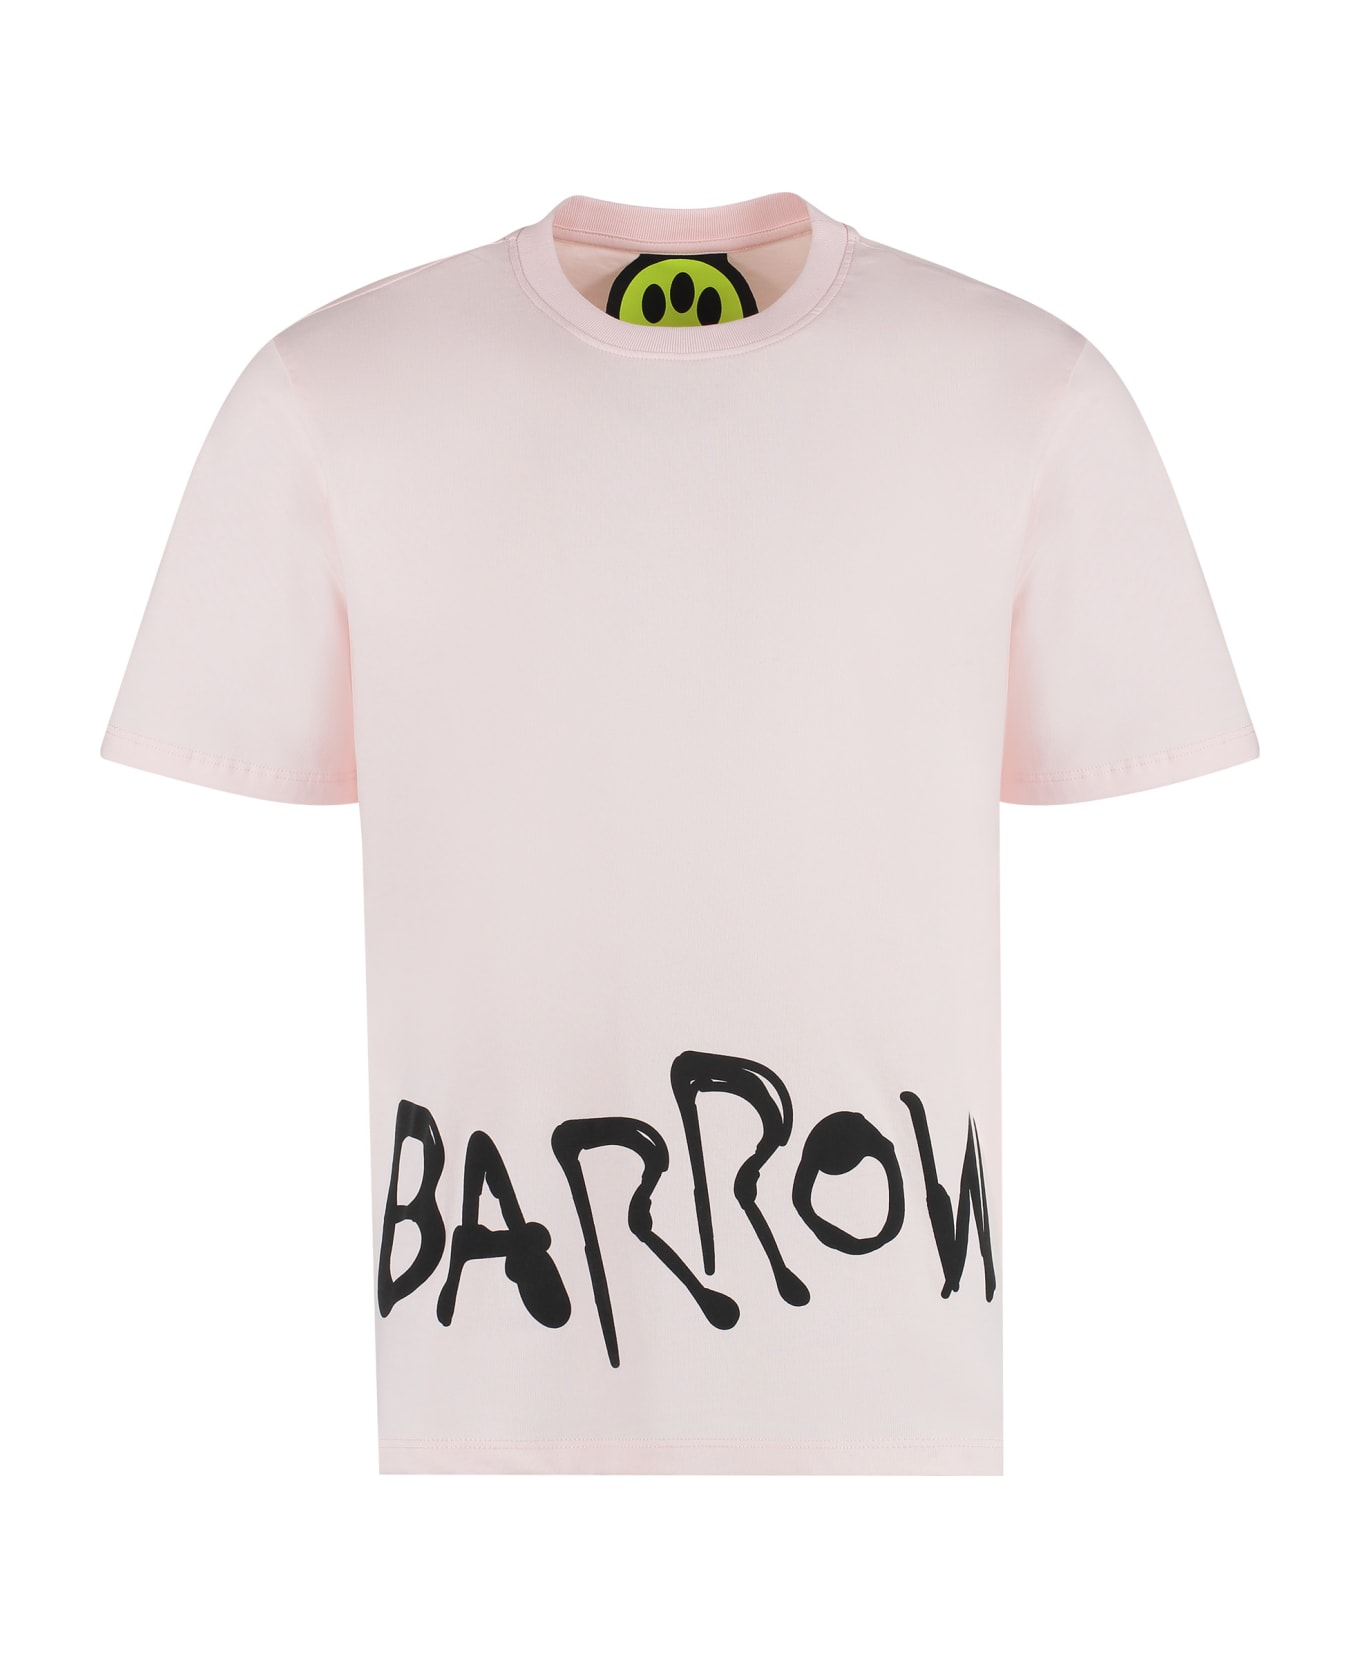 Barrow Printed Cotton T-shirt - Light Pink